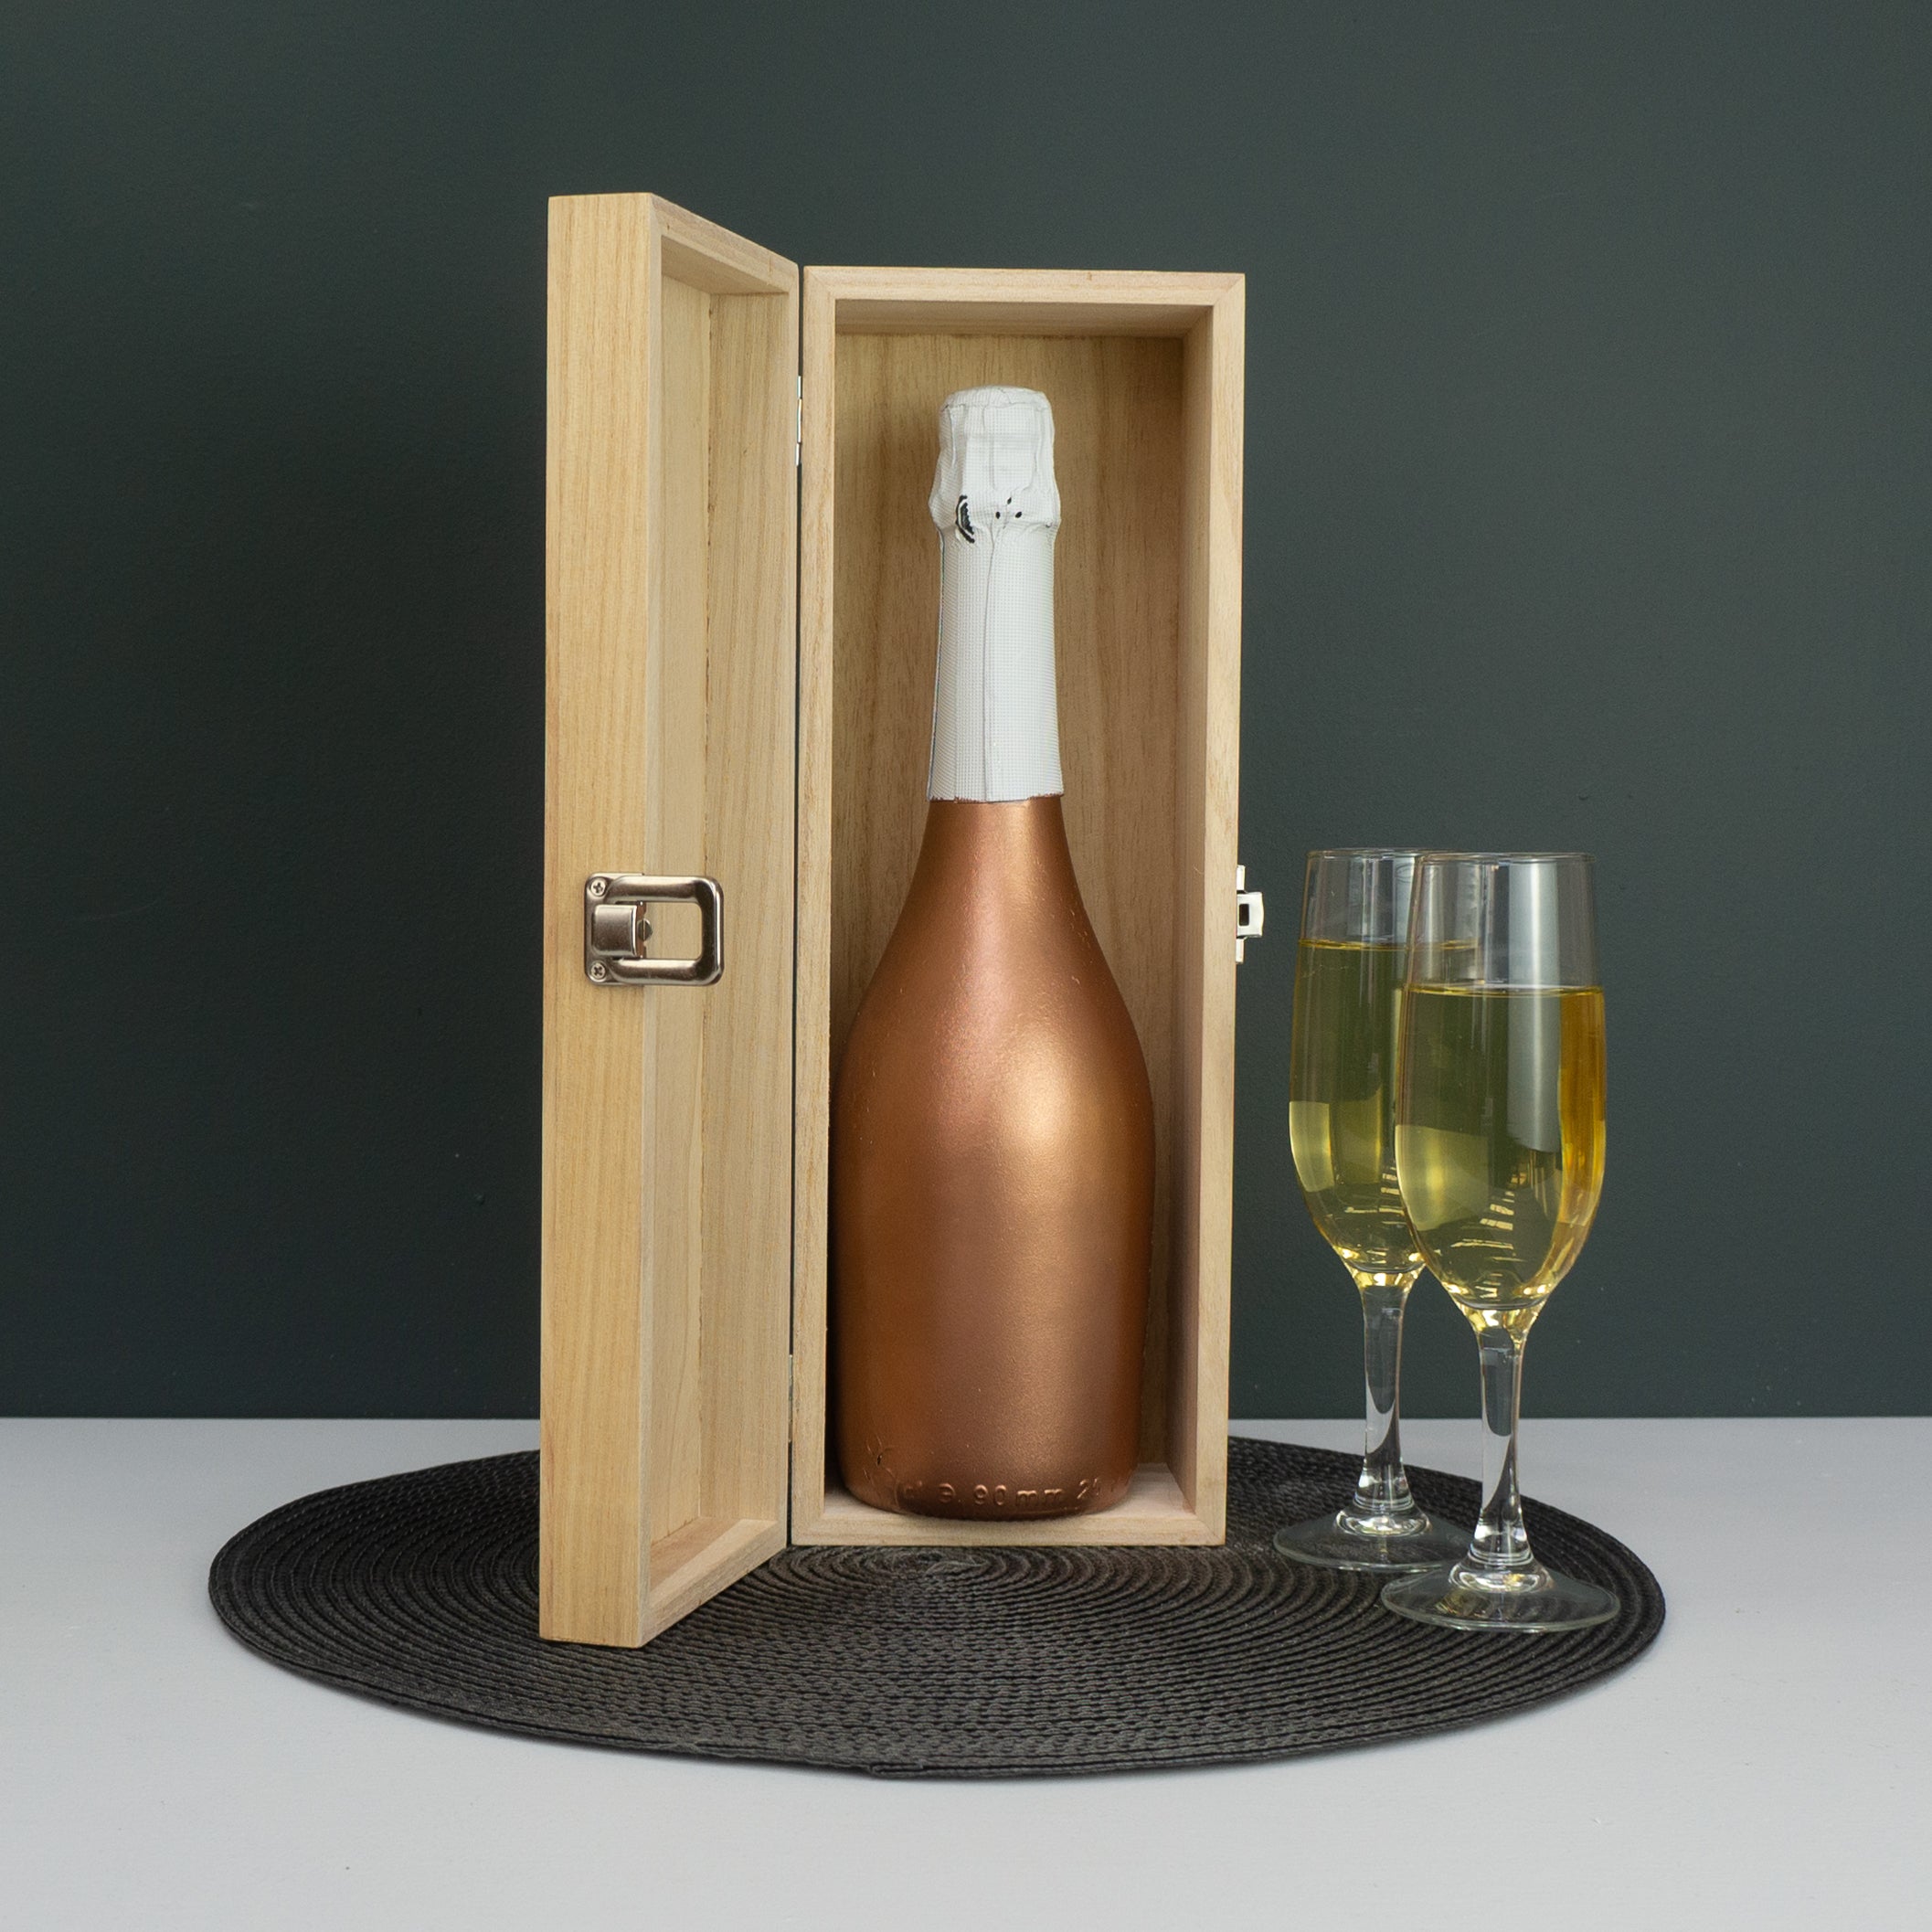 30th birthday wine champagne bottle gifting box